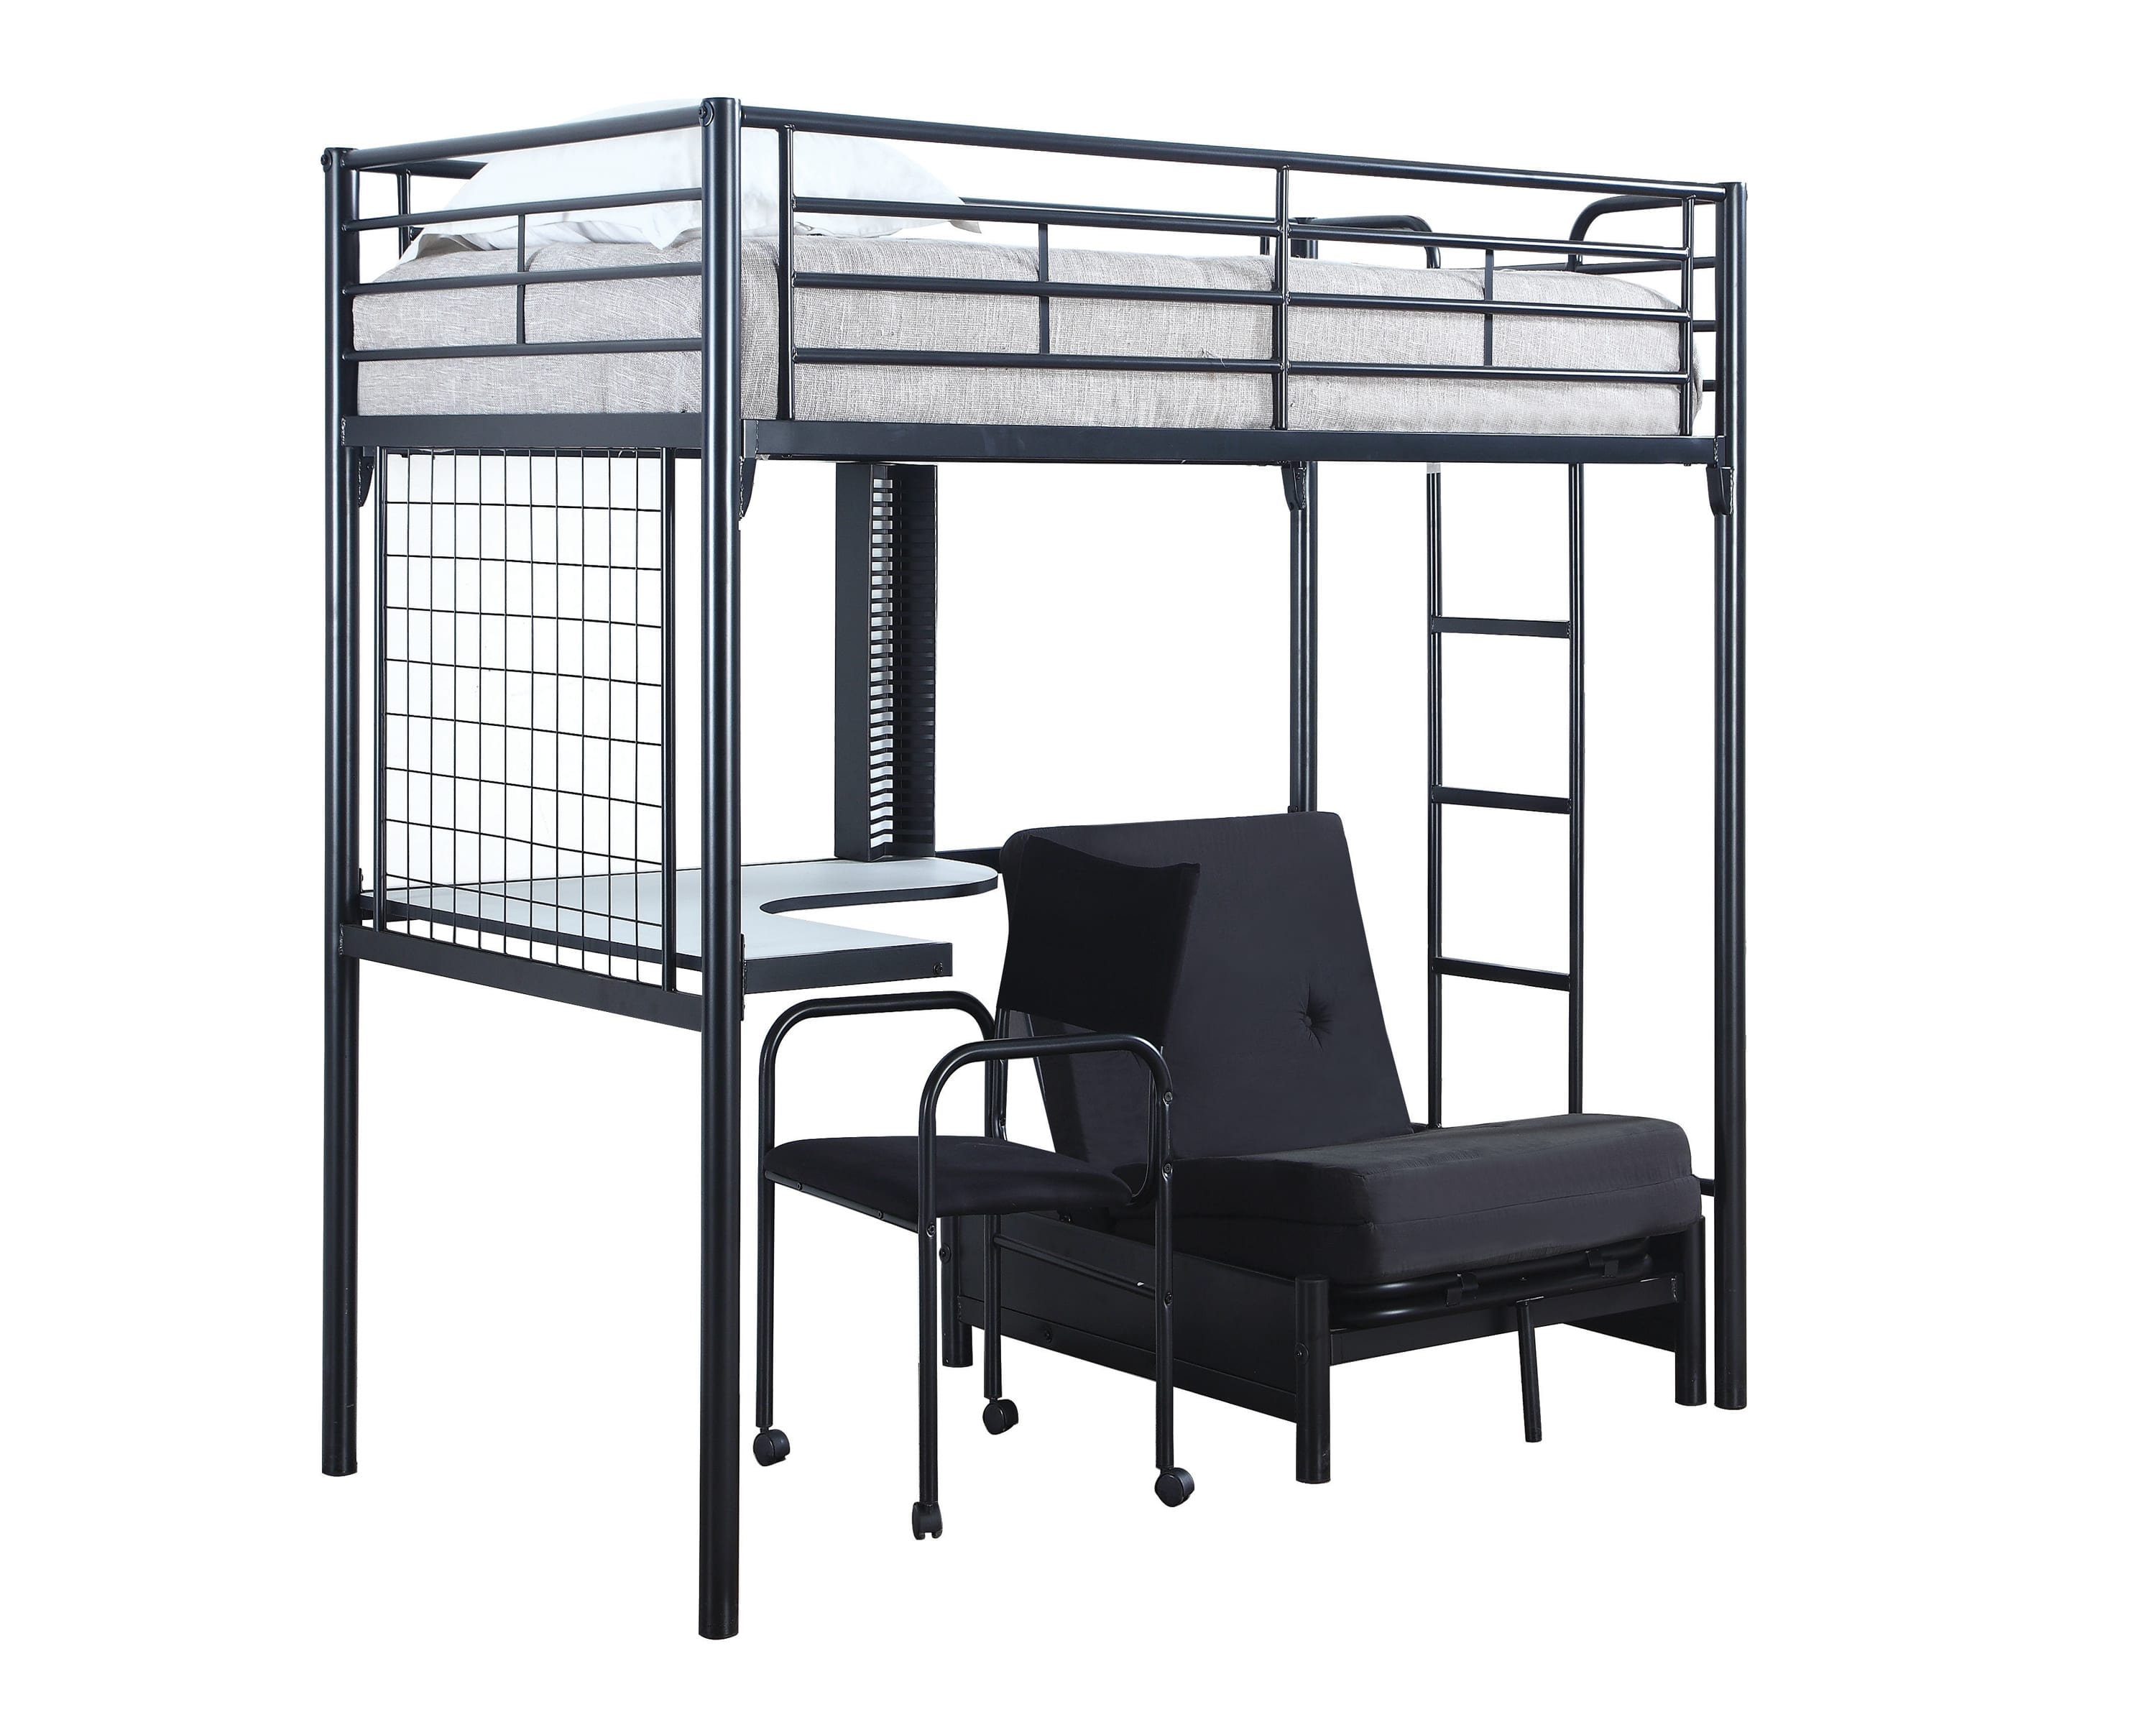 Jenner Futon Contemporary Metal Loft Bunk Bed w/ Desk by Coaster